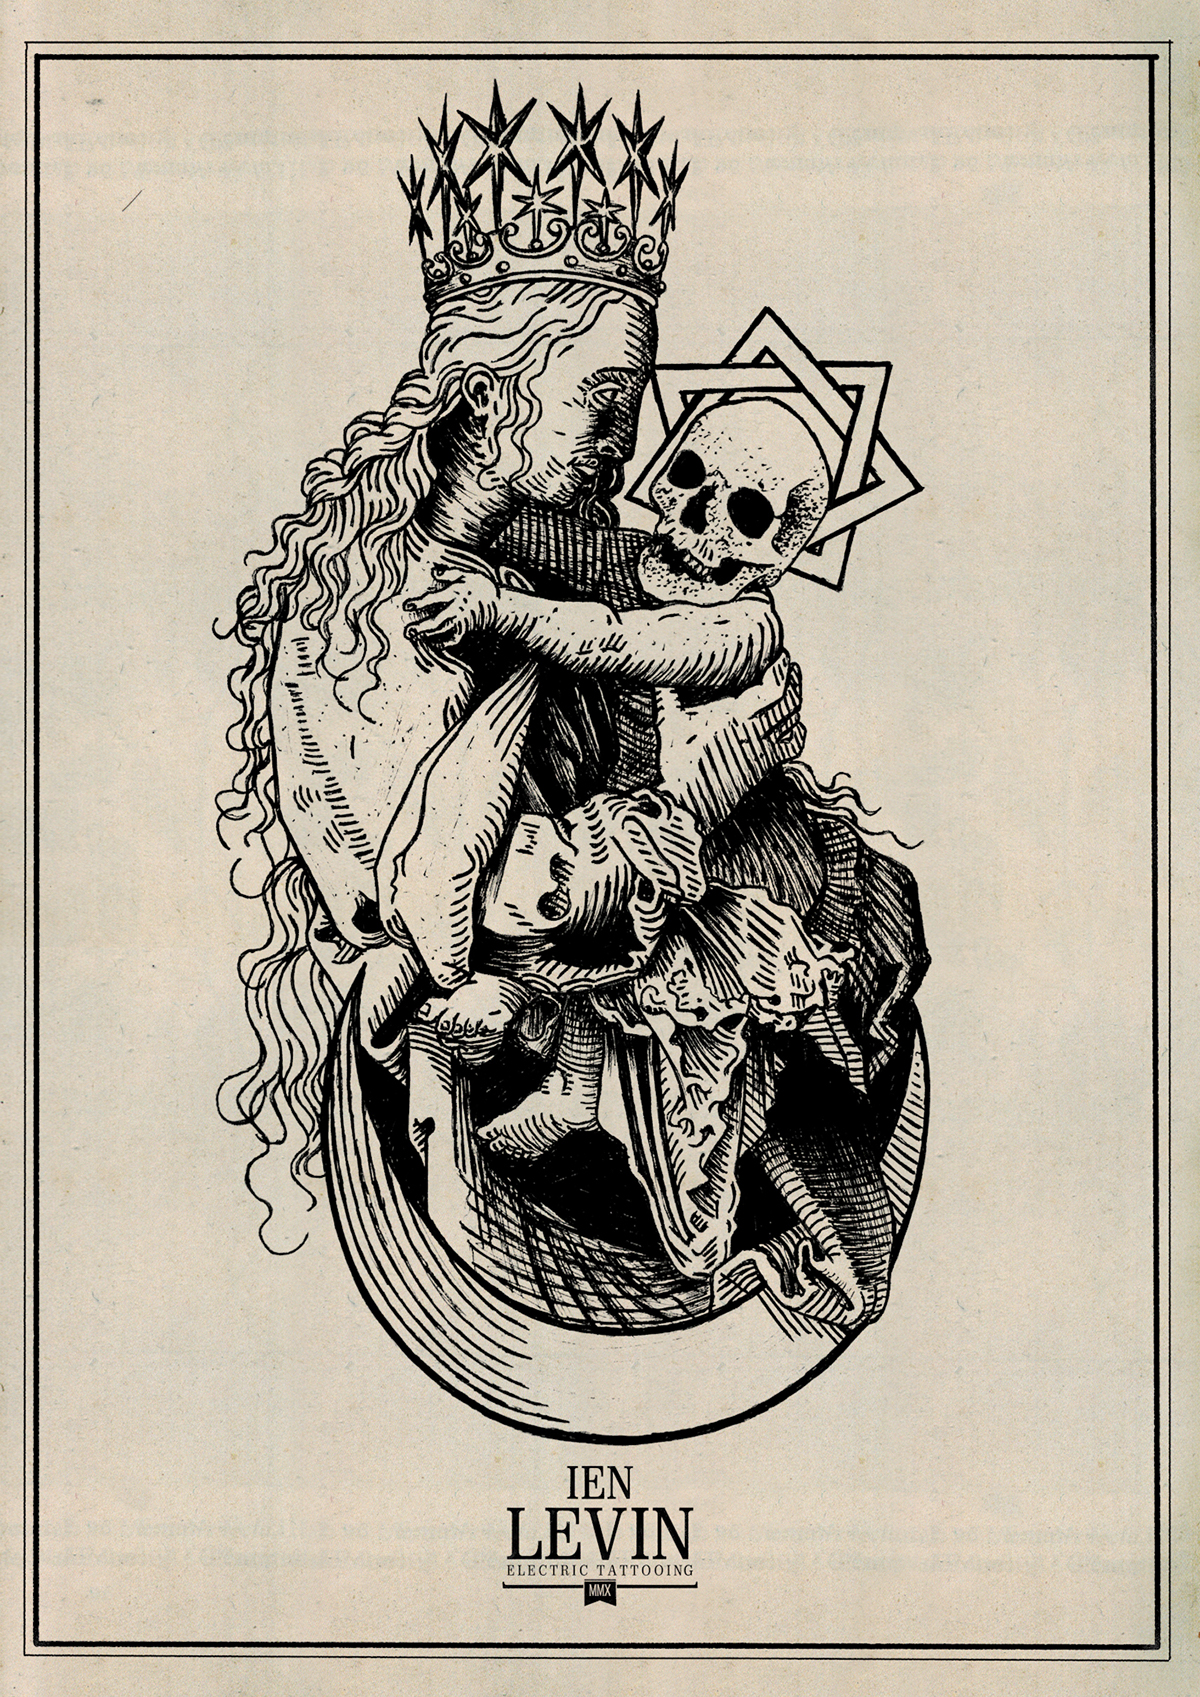 levin ienlevin dotwork lineart engraving sacred geometry Mandala tattoo satanic masonic flash sheet print